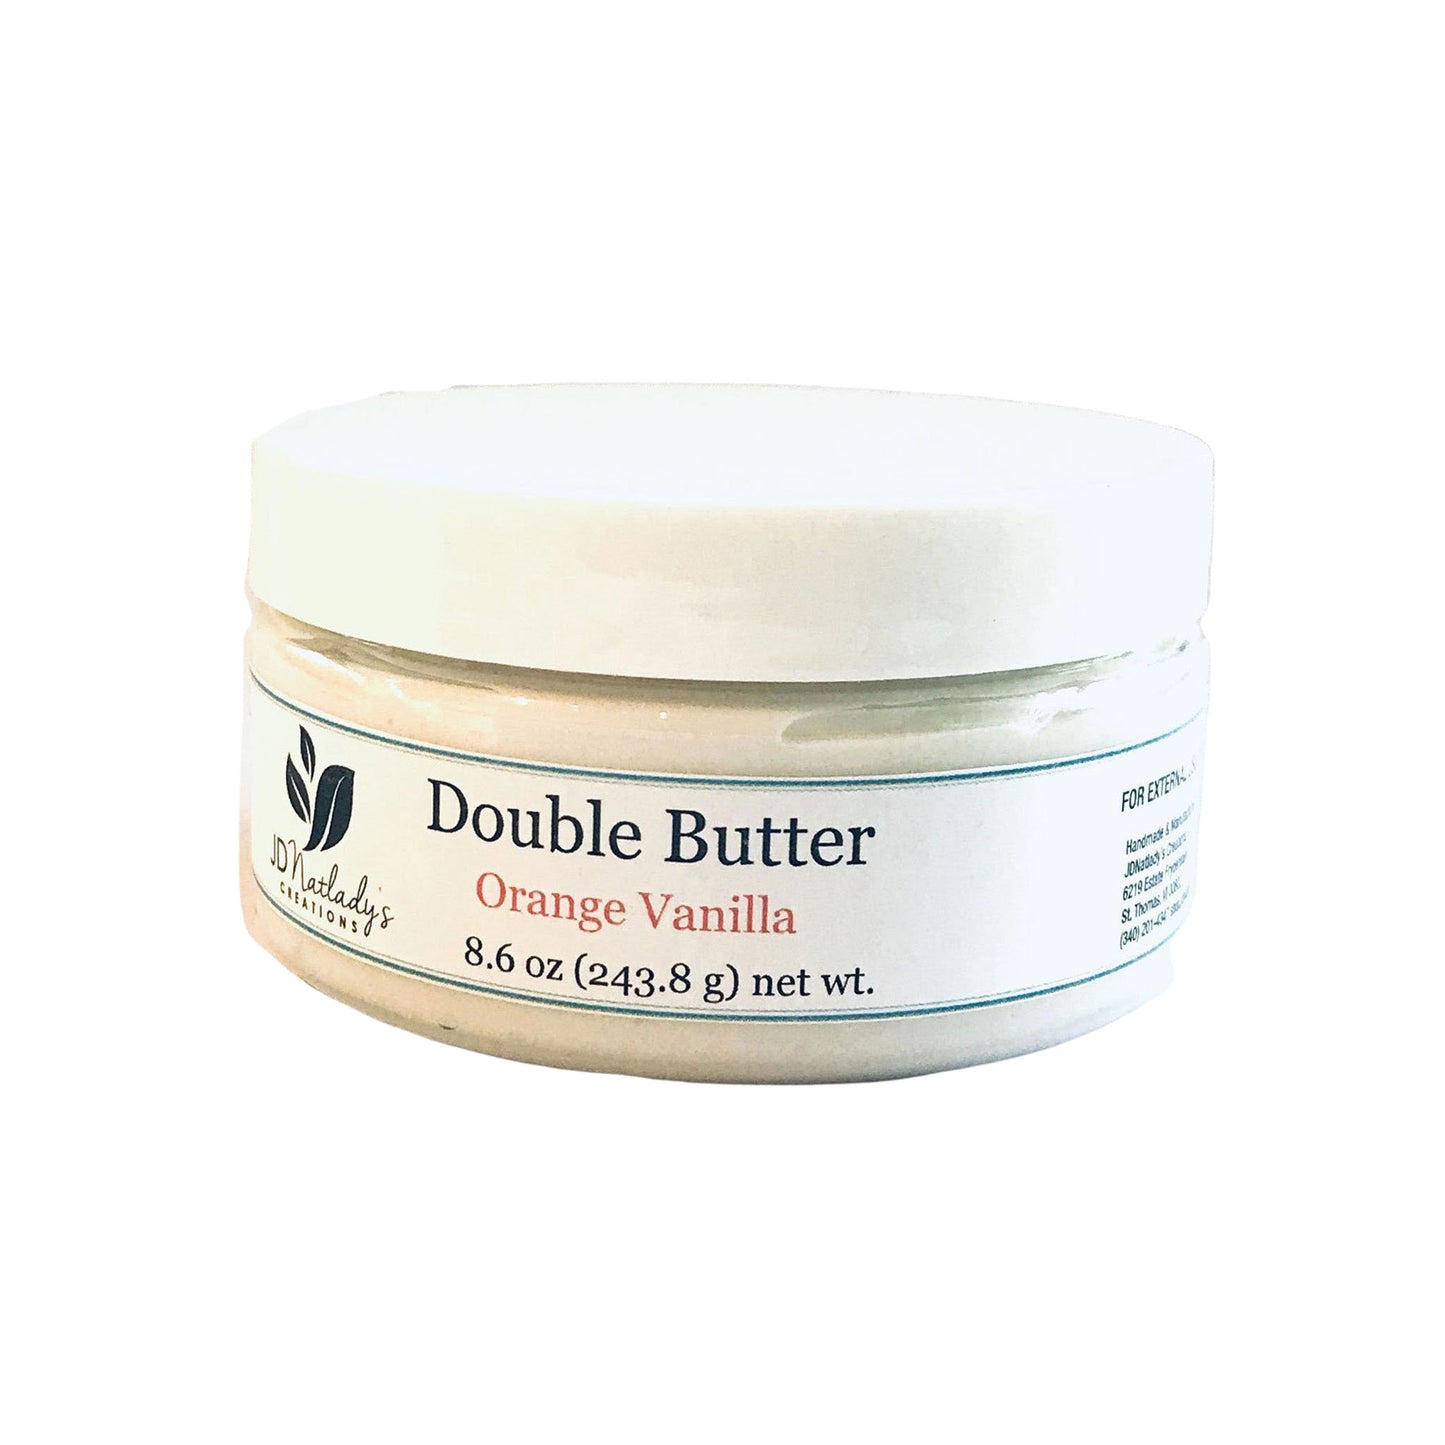 moisturizing body butter by JDNatlady's Creations